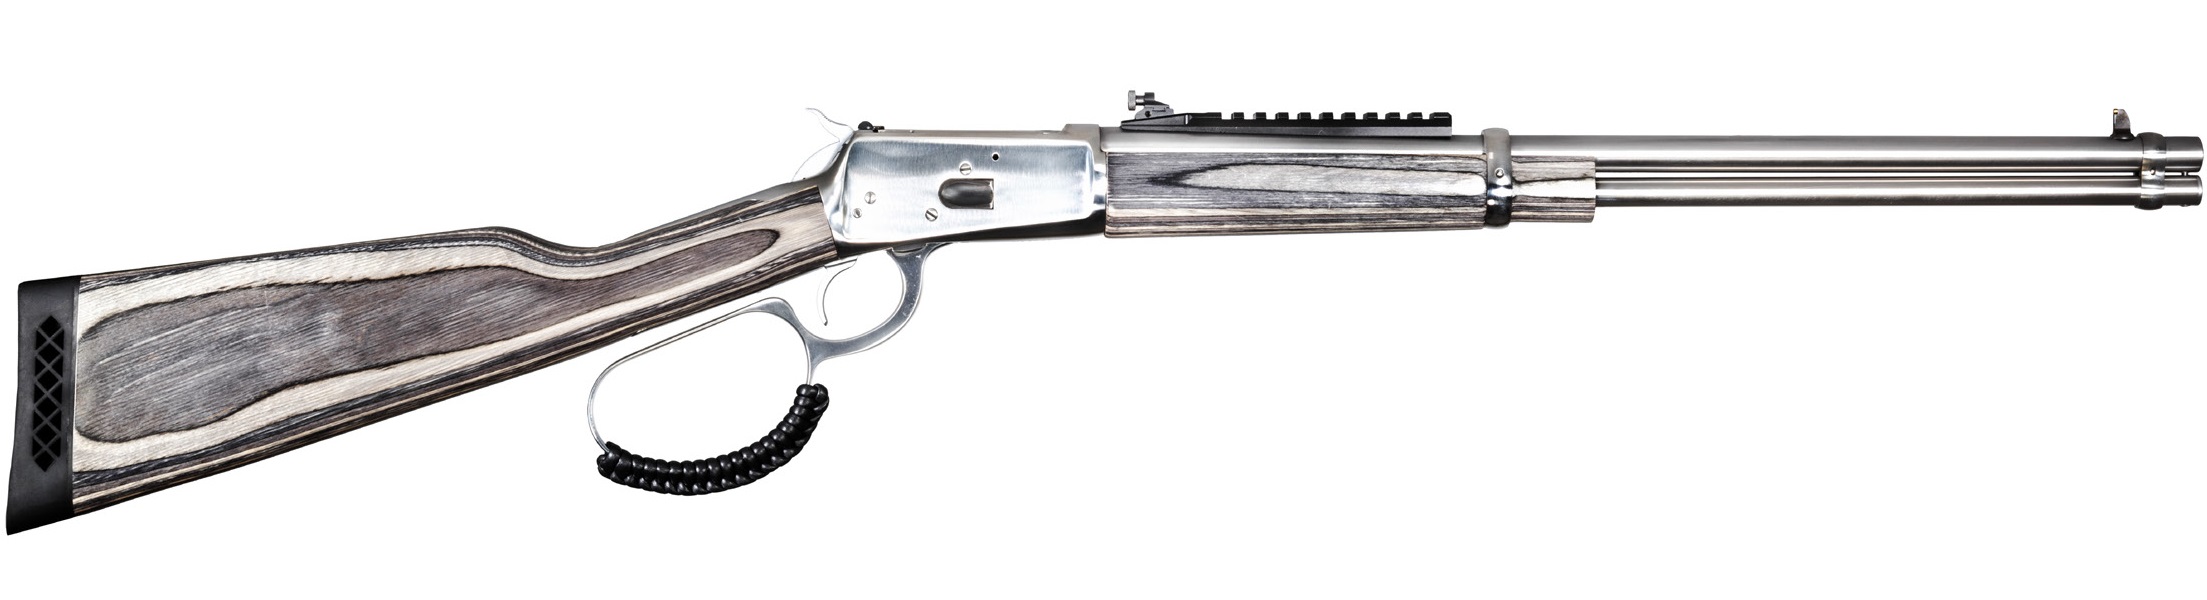 Rossi Model 92 Carbine